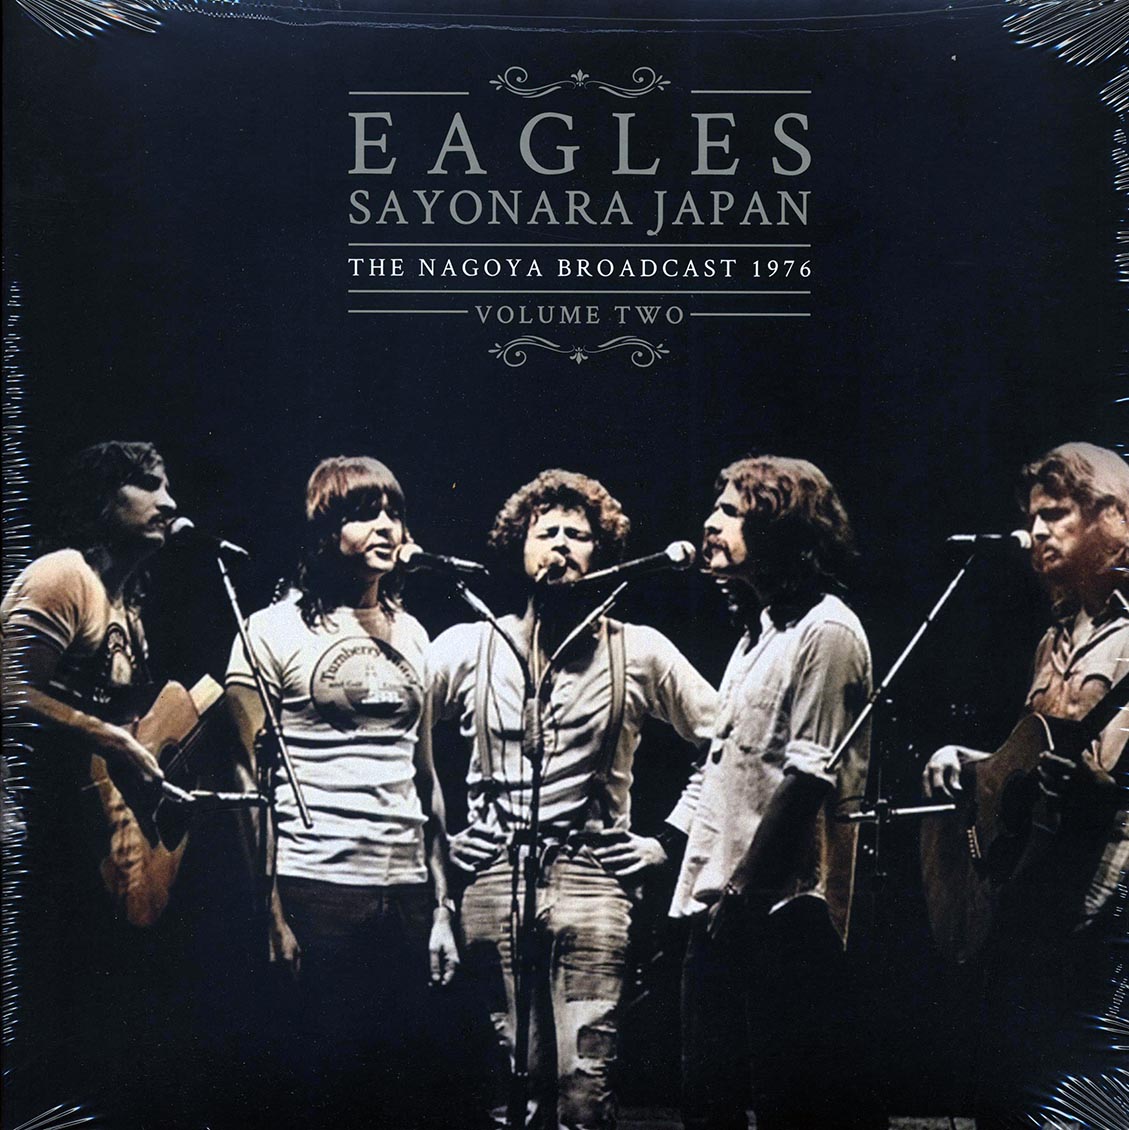 Eagles - Sayonara Japan Volume 2: The Nagoya Broadcast 1976 (2xLP) - Vinyl LP